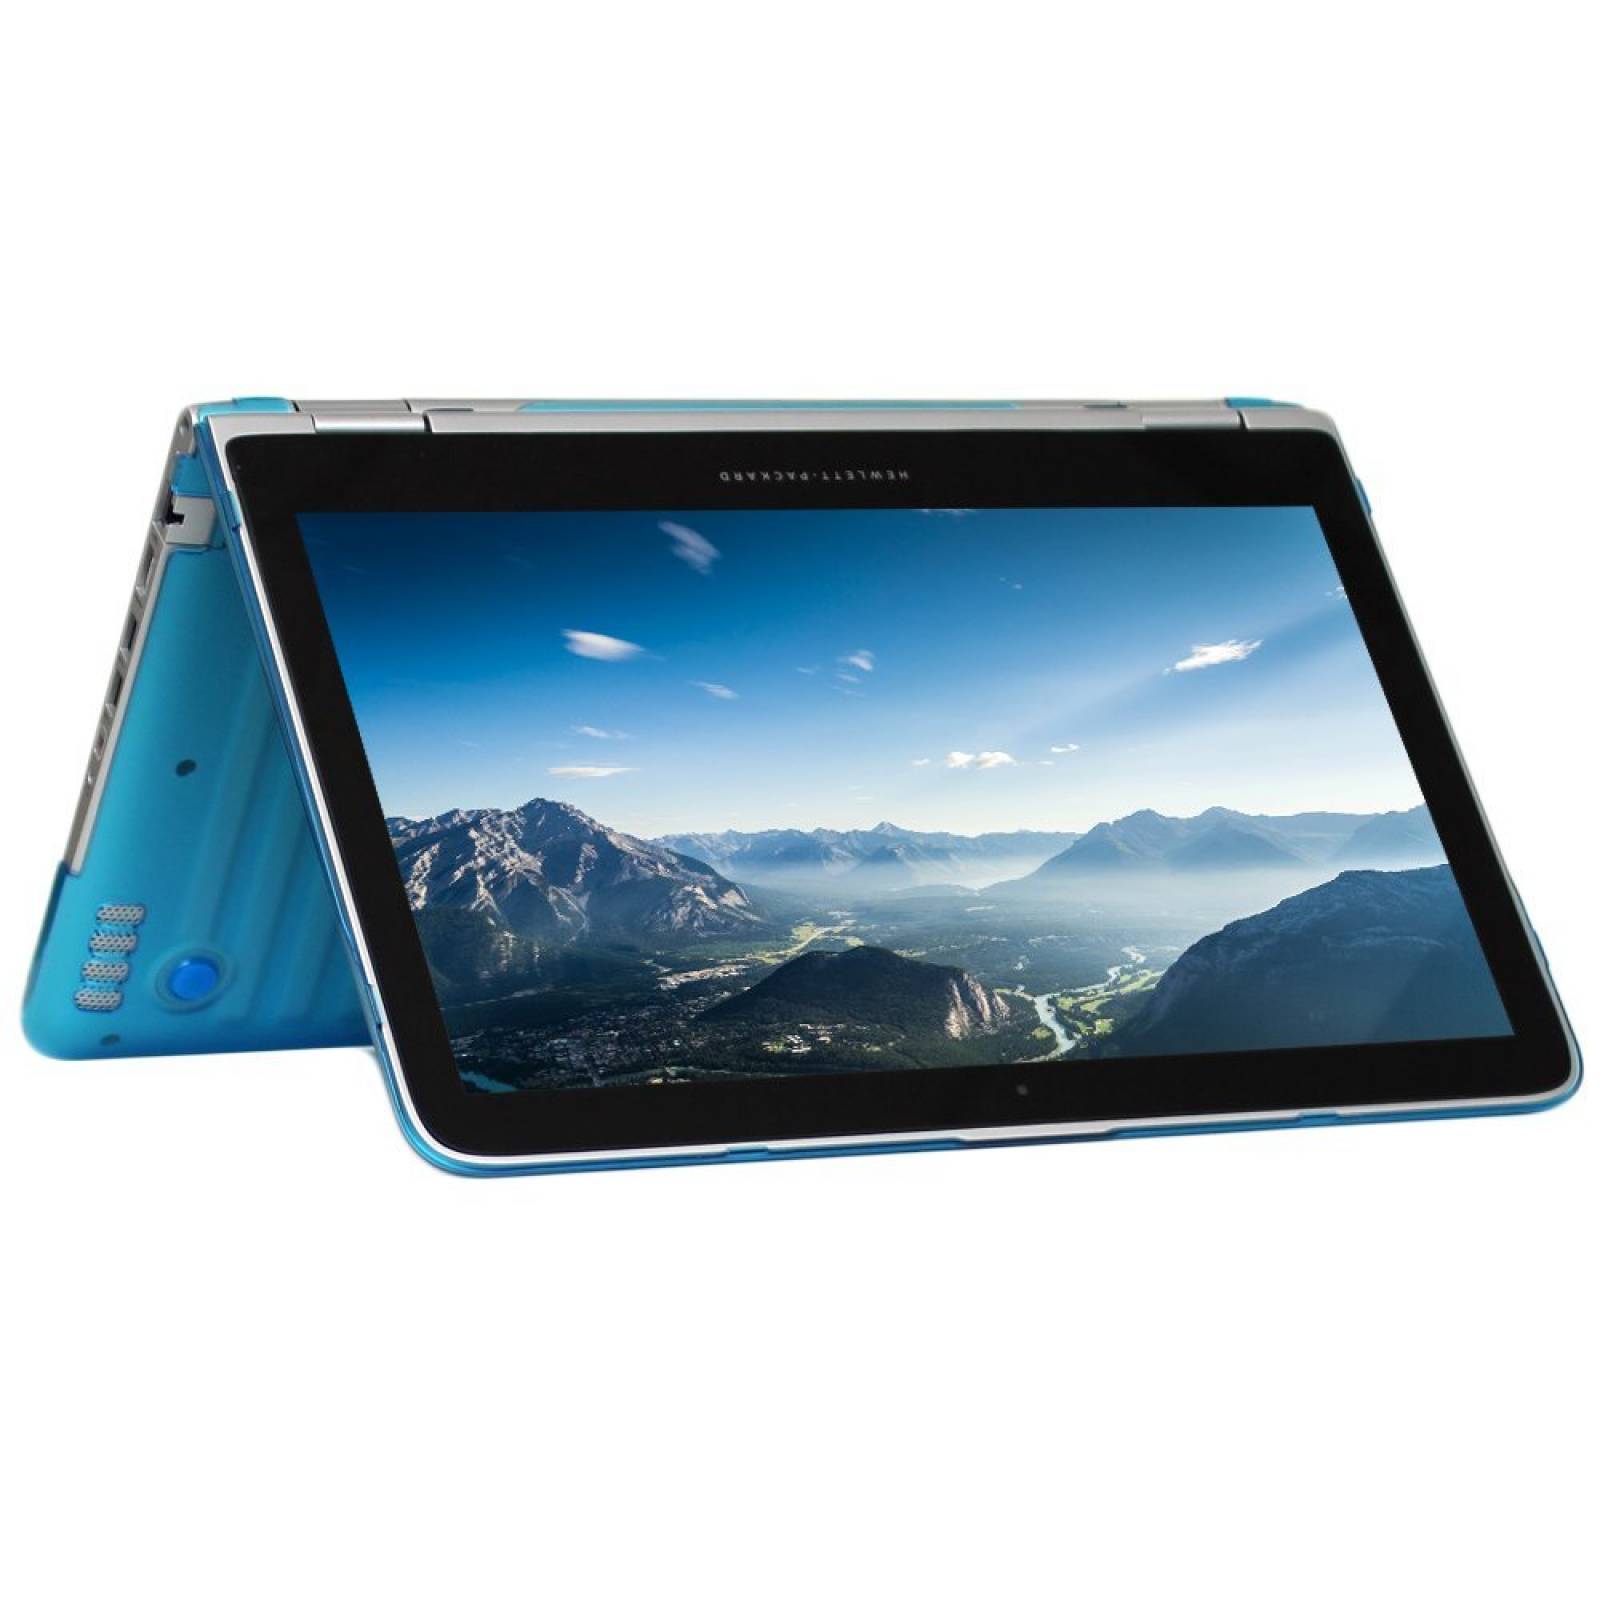 Carcasa Dura Mcover P/ Laptop Hp Pavilion X360 13 -azul